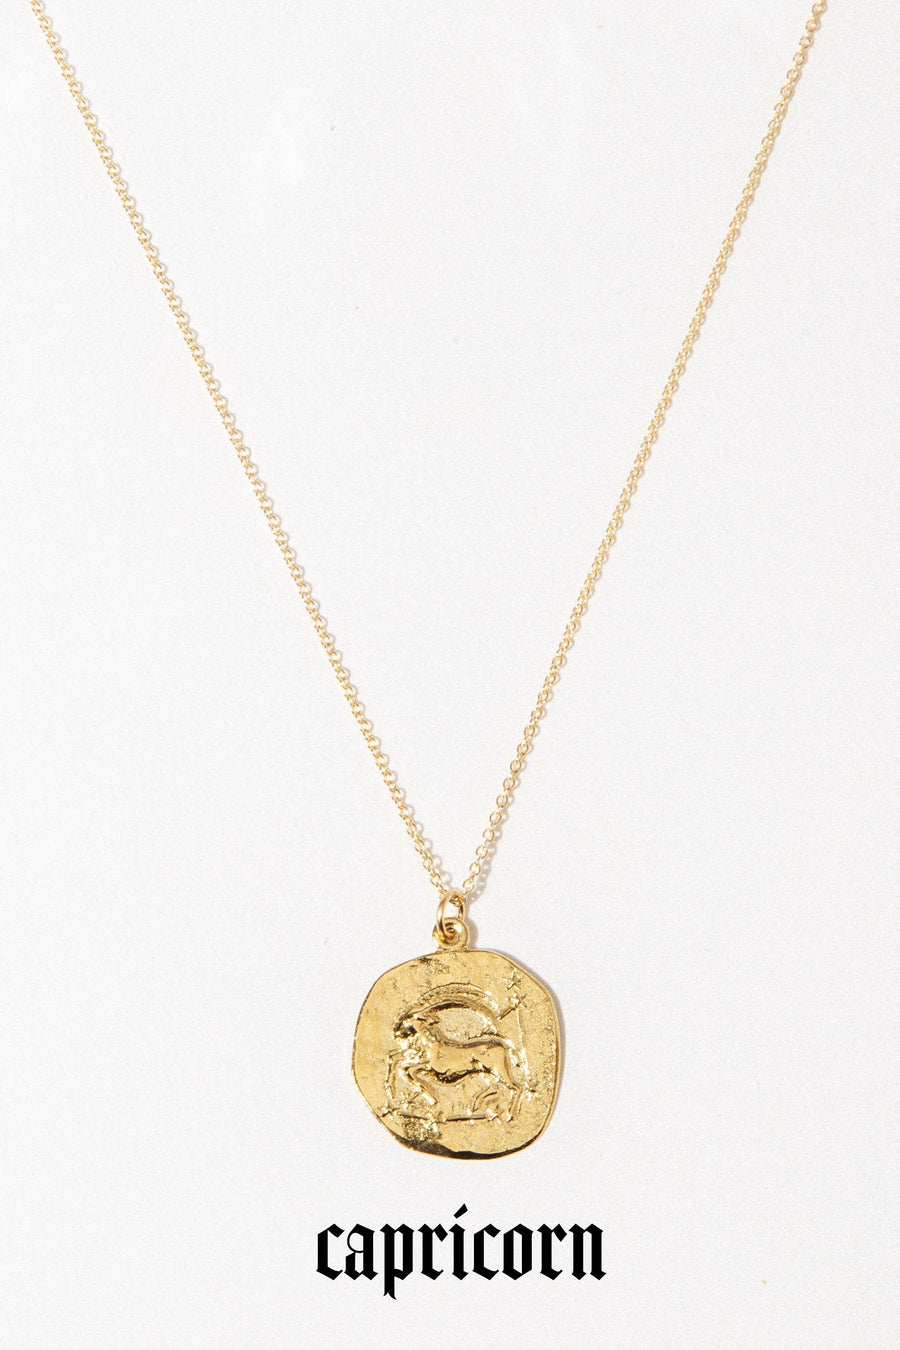 Studio Grun Jewelry Capricorn / Gold / 20 inches Zodiac Necklace